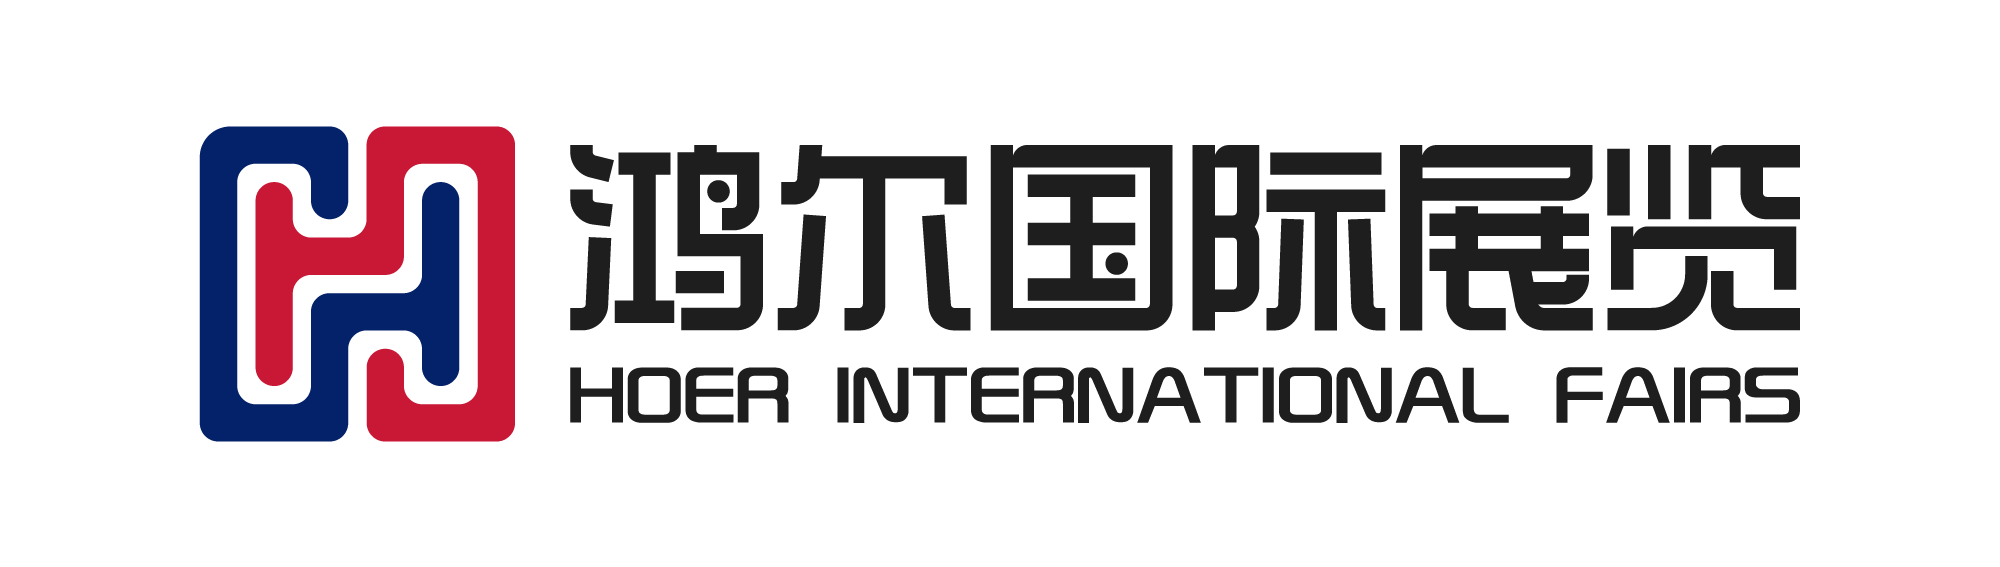 Beijing Hoer International Fairs Co Ltd - Logo.png